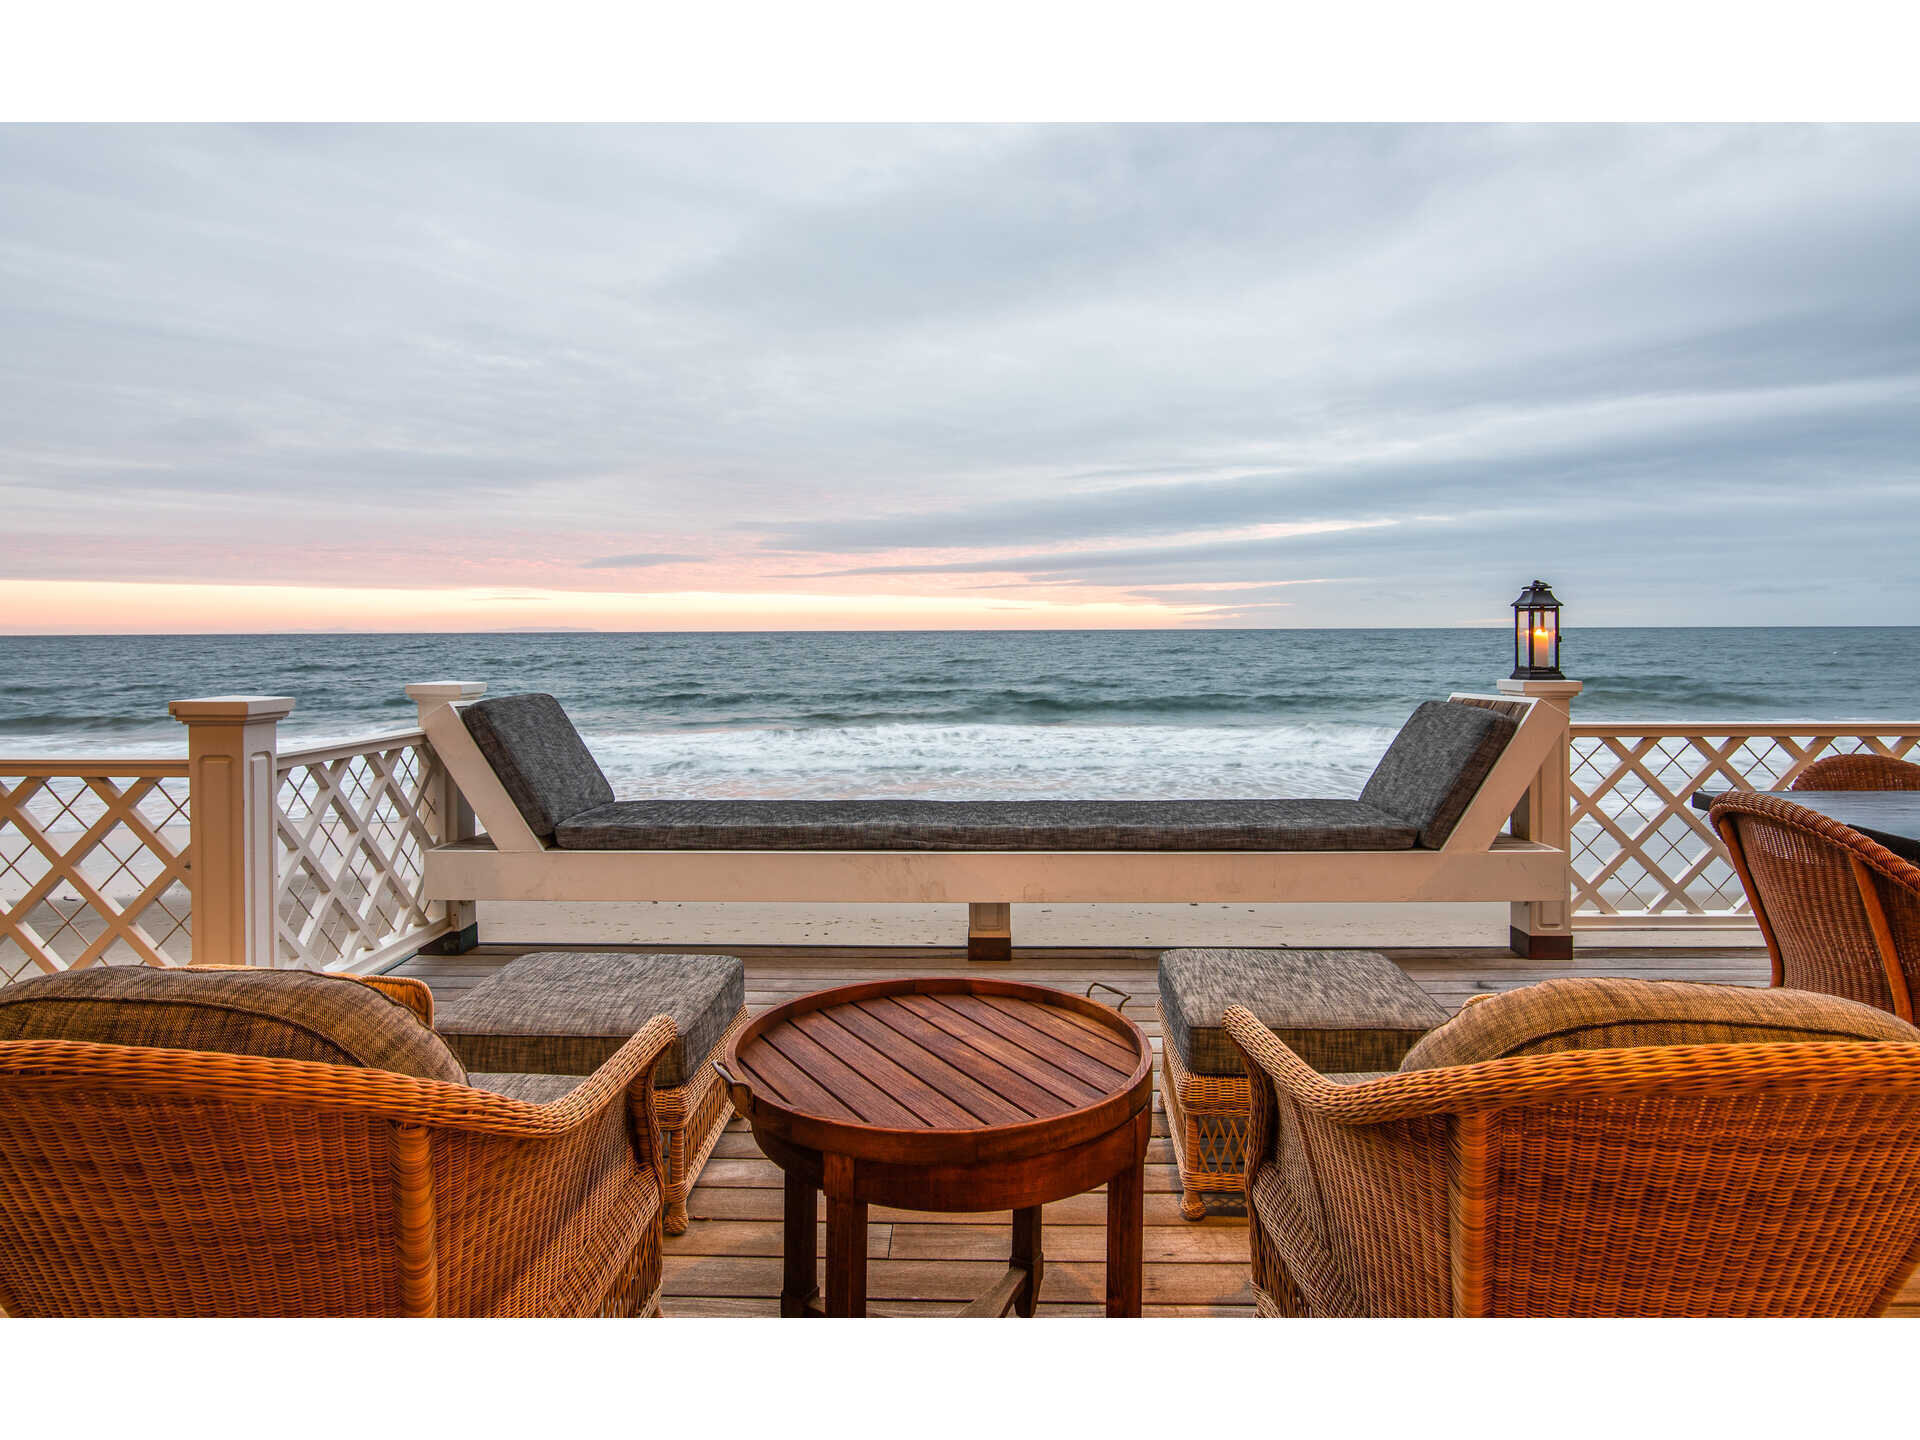 Francis York A Resort Developer’s Oceanfront Malibu Mansion18.jpg